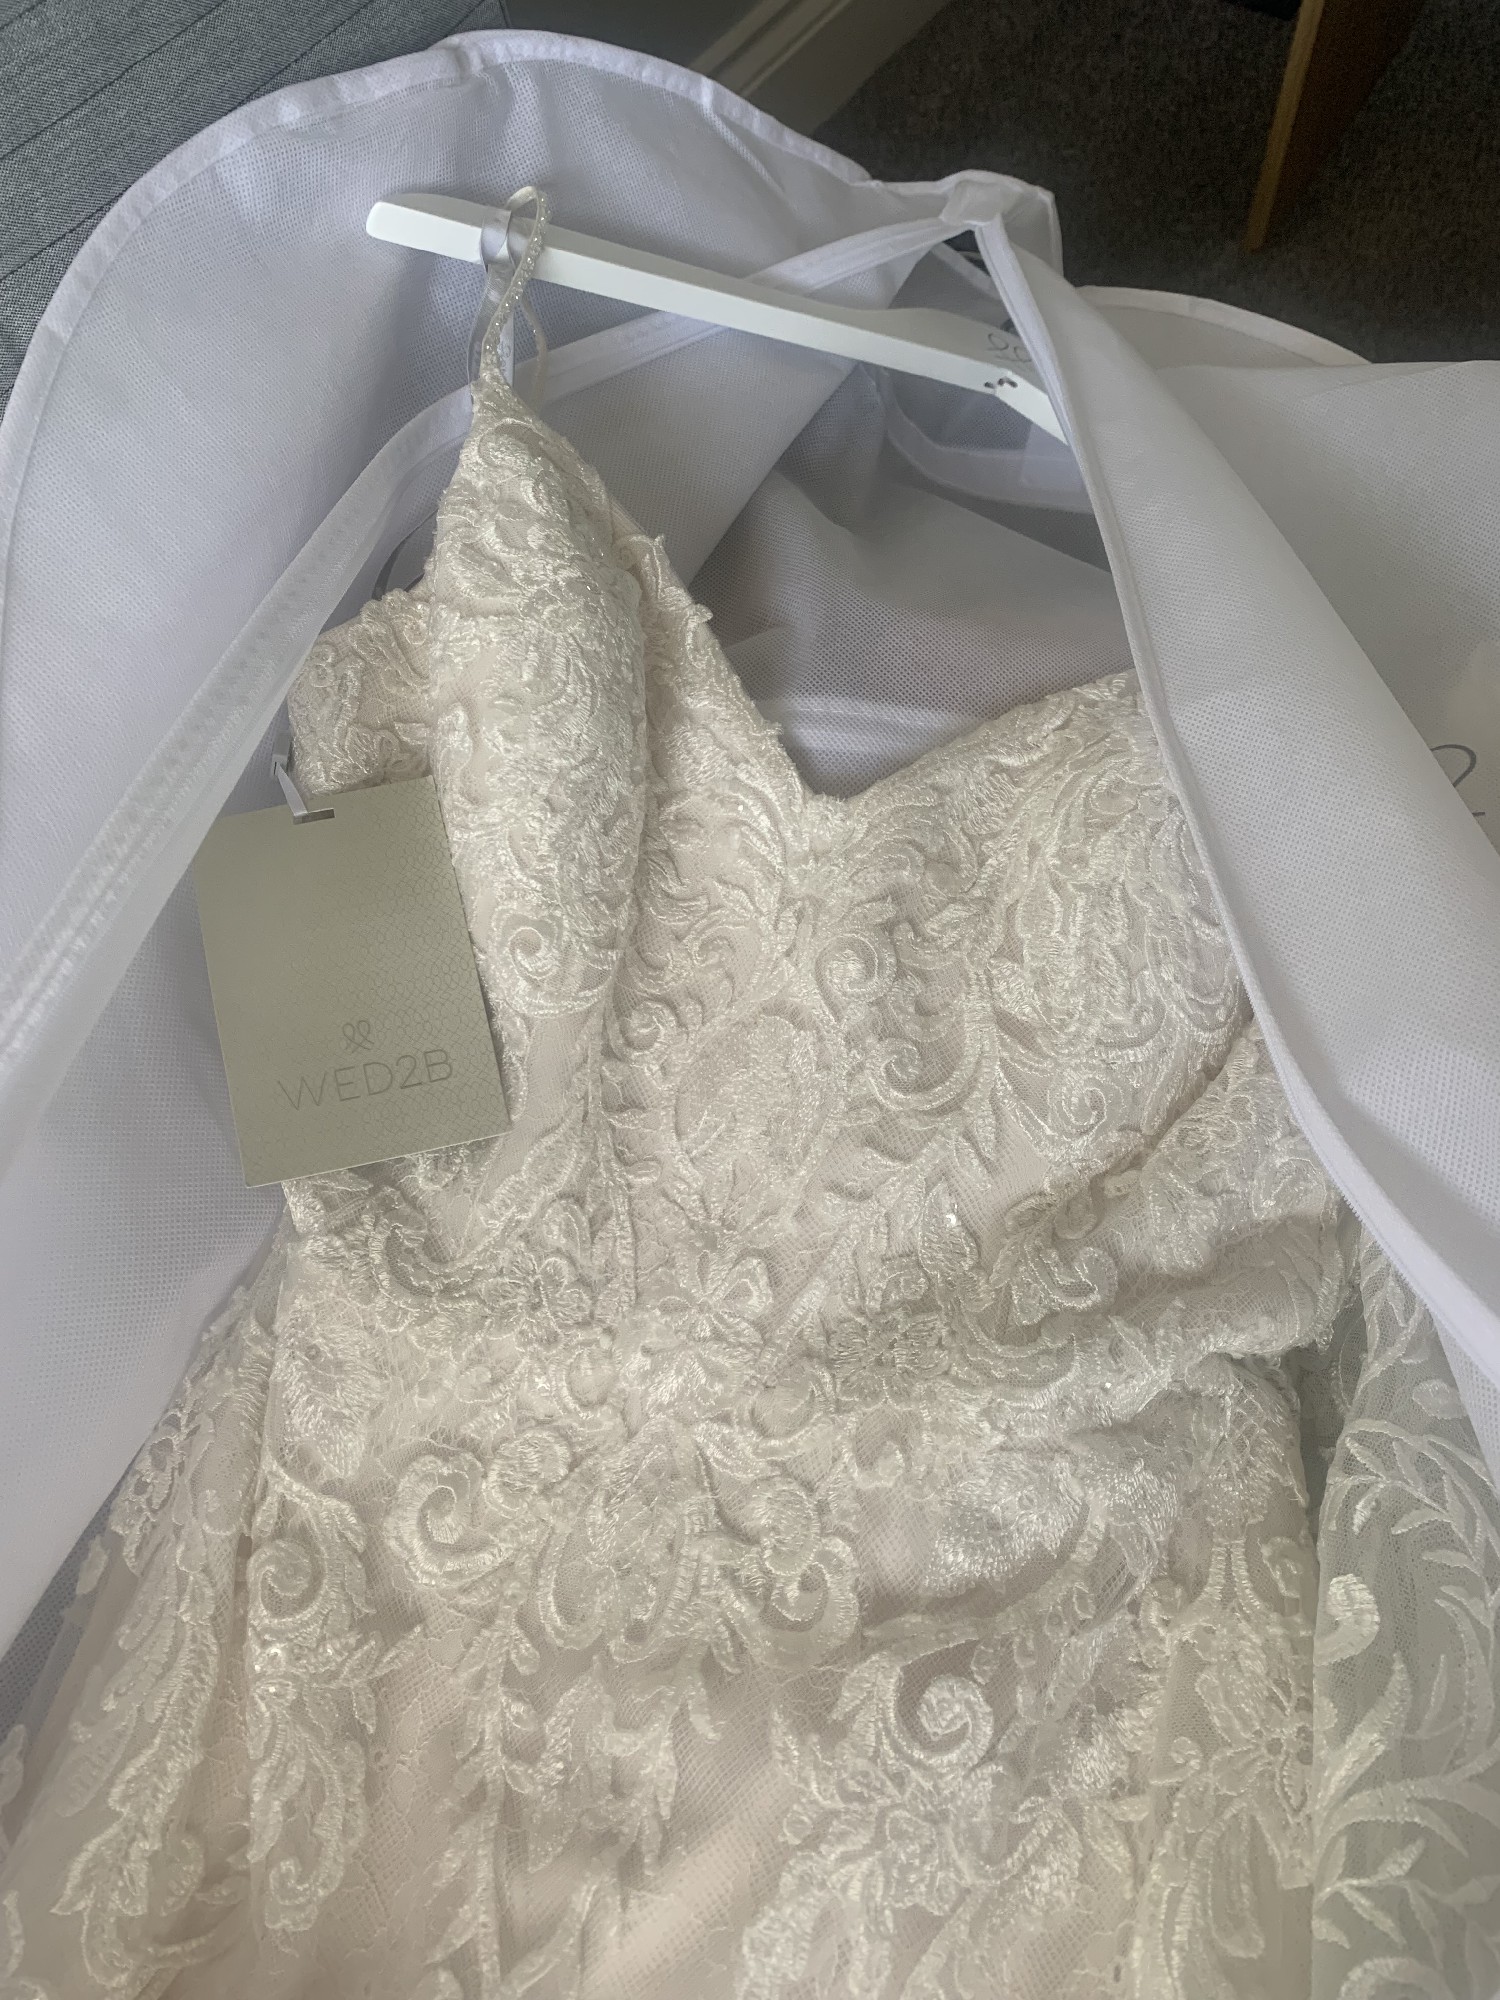 Wed2b Kayden New Wedding Dress - Stillwhite